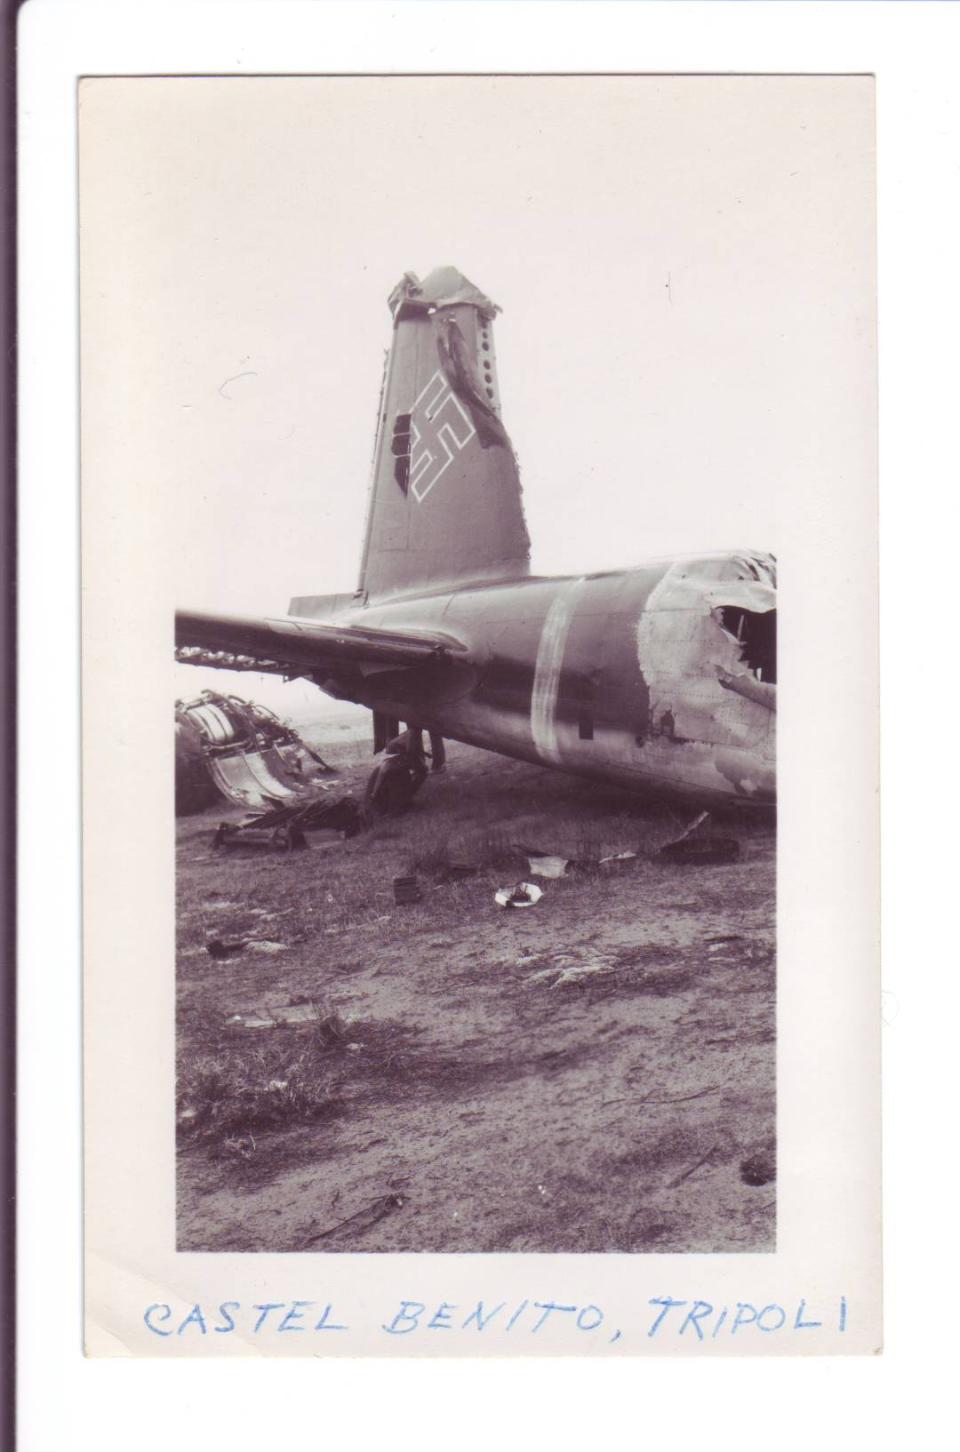 Photo #1
German Plane at
Castel Benito (near)Tripoli